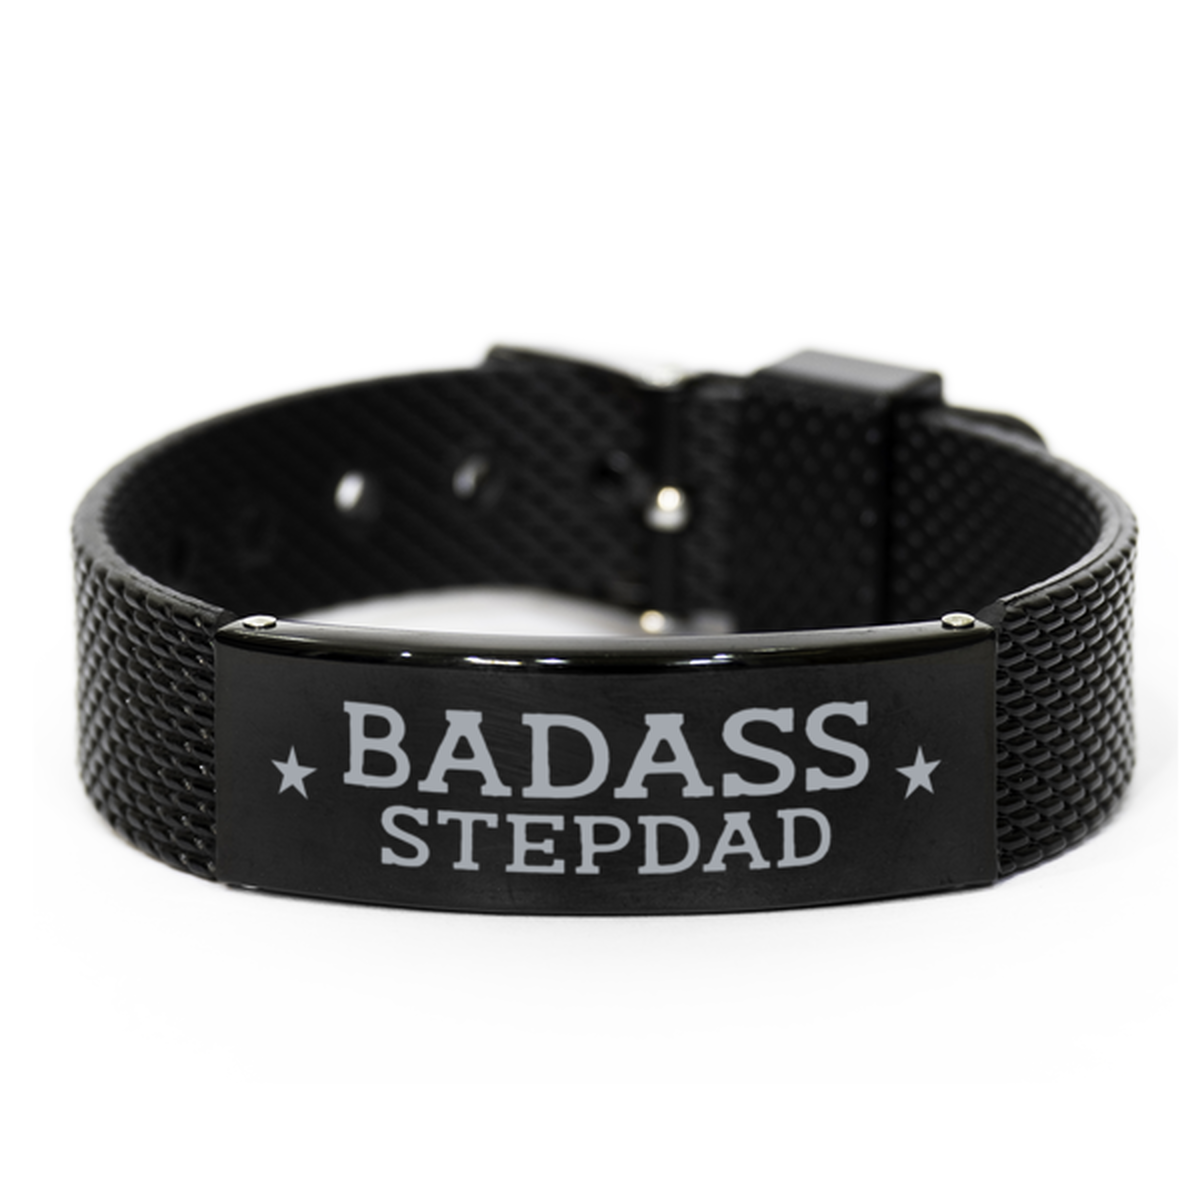 Stepdad Black Shark Mesh Bracelet, Badass Stepdad, Funny Family Gifts For Stepdad From Son Daughter